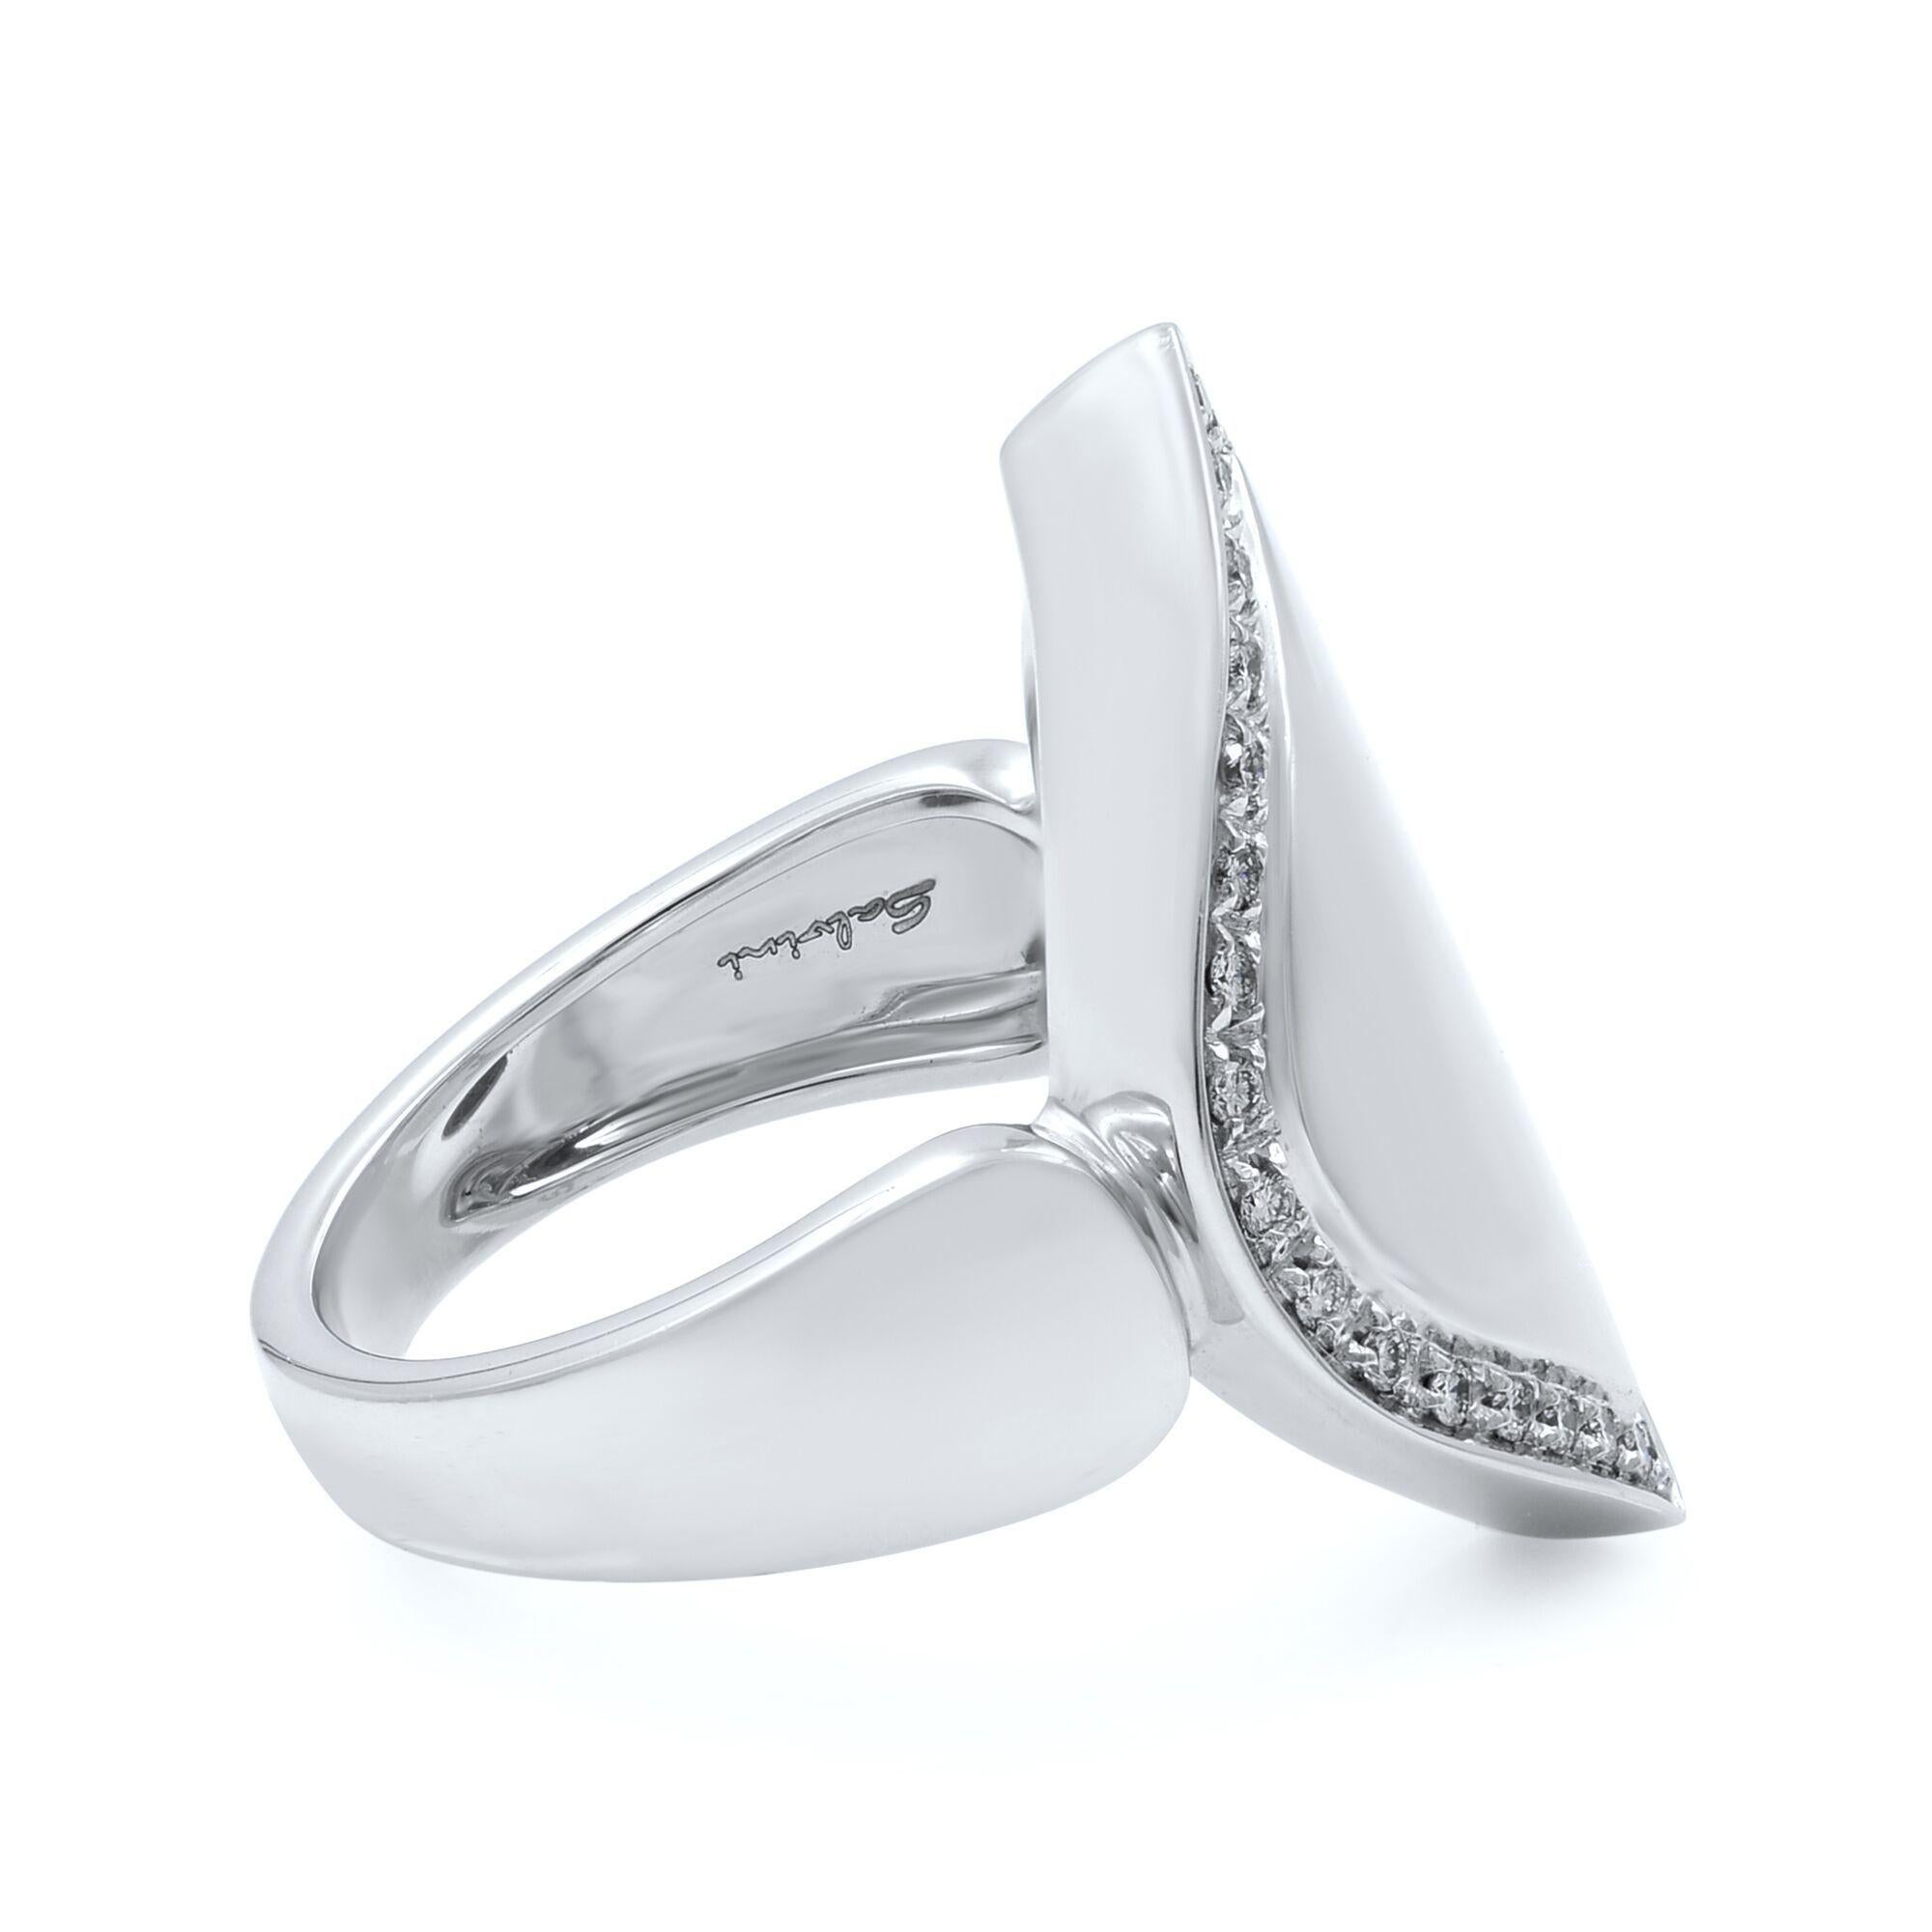 Round Cut Salvini Diamond Cocktail Signet Ladies Ring 18k White Gold 0.60 Cttw For Sale